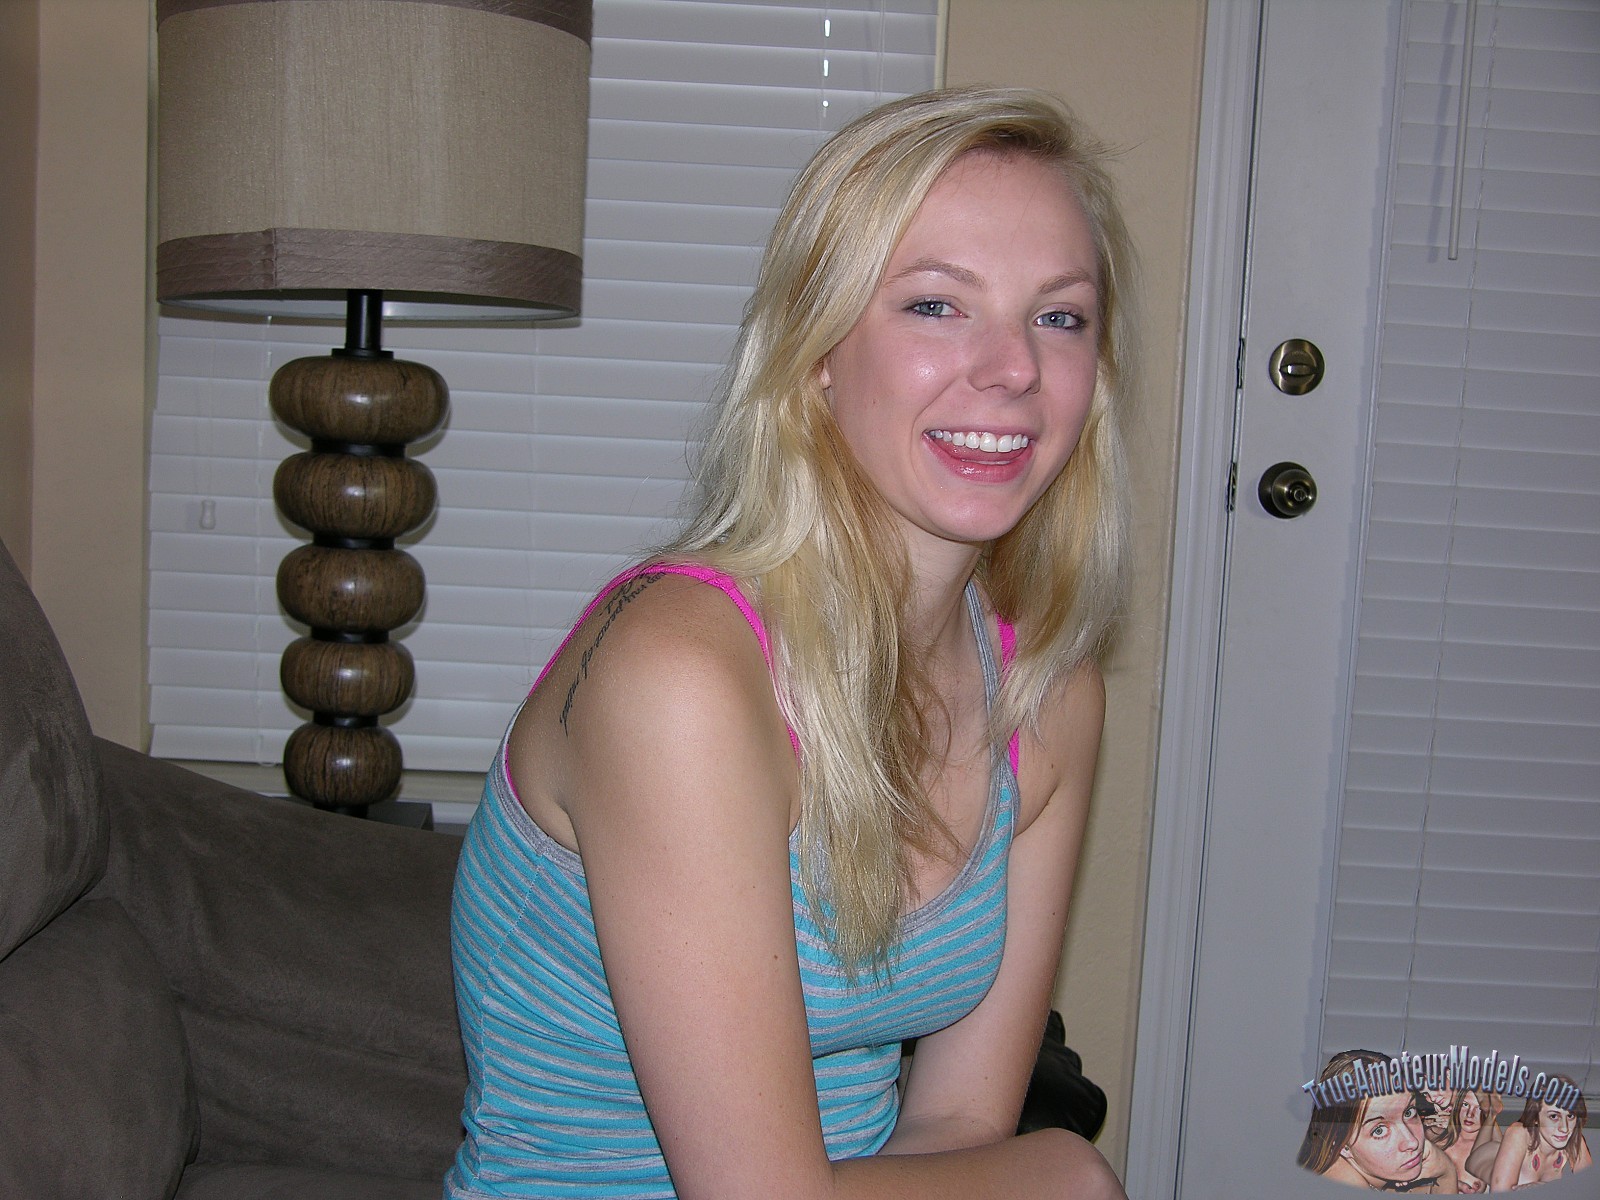 xpics - girlfriend sex Hot amateur blonde teen spreads butthole picture picture